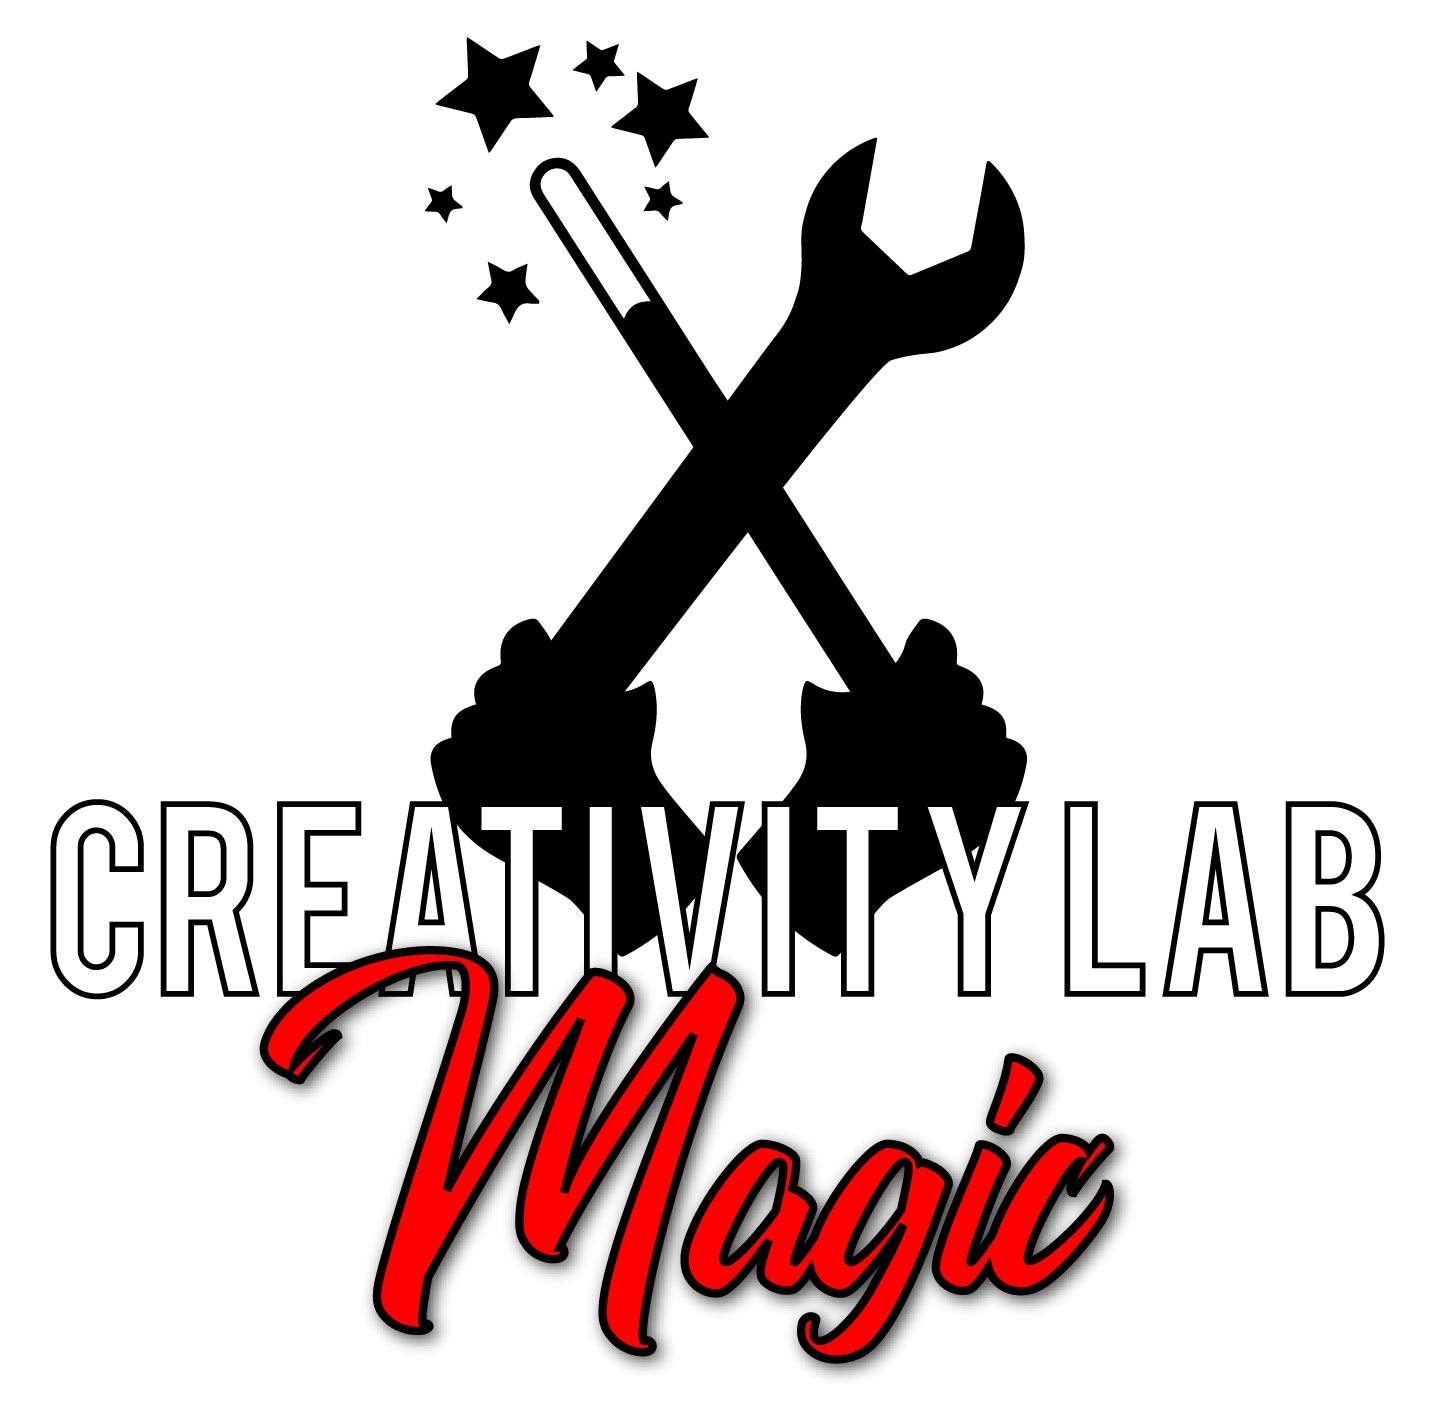 Creativity Lab MAGIC